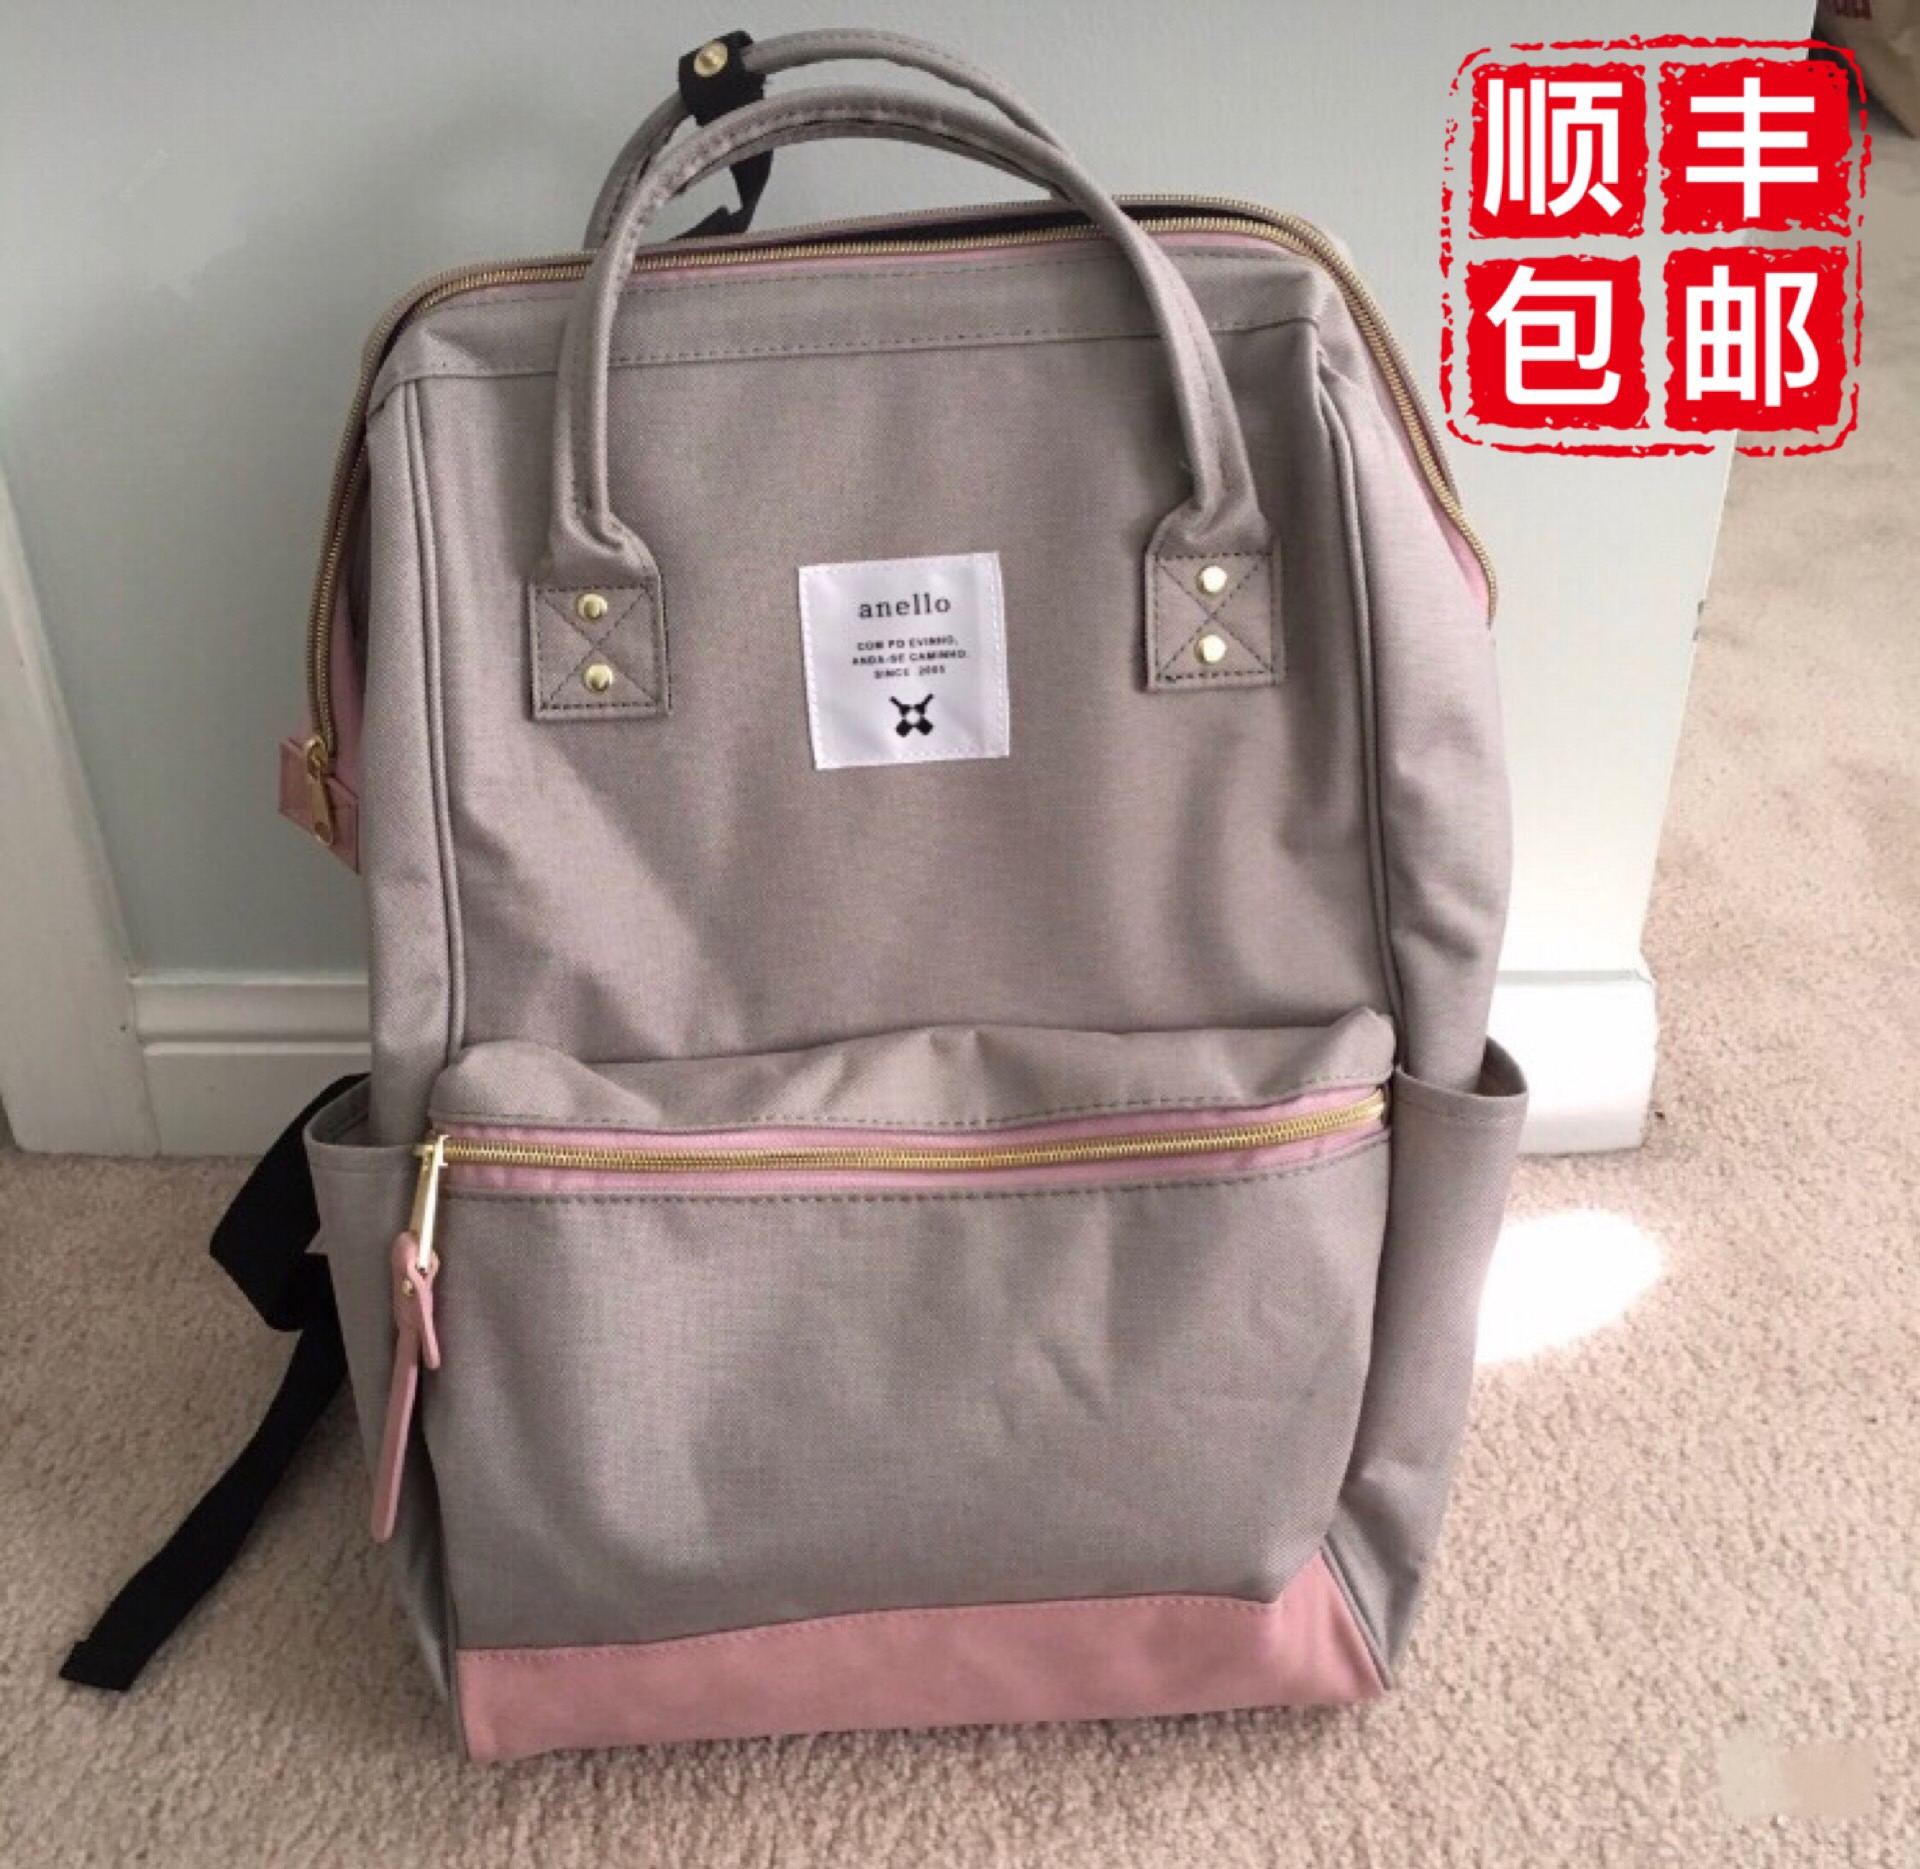 Lu Xiaohui, Japan Letian Limited Co-op Sand Ash and Pink Shoulder Mommy Bag Leaves Home